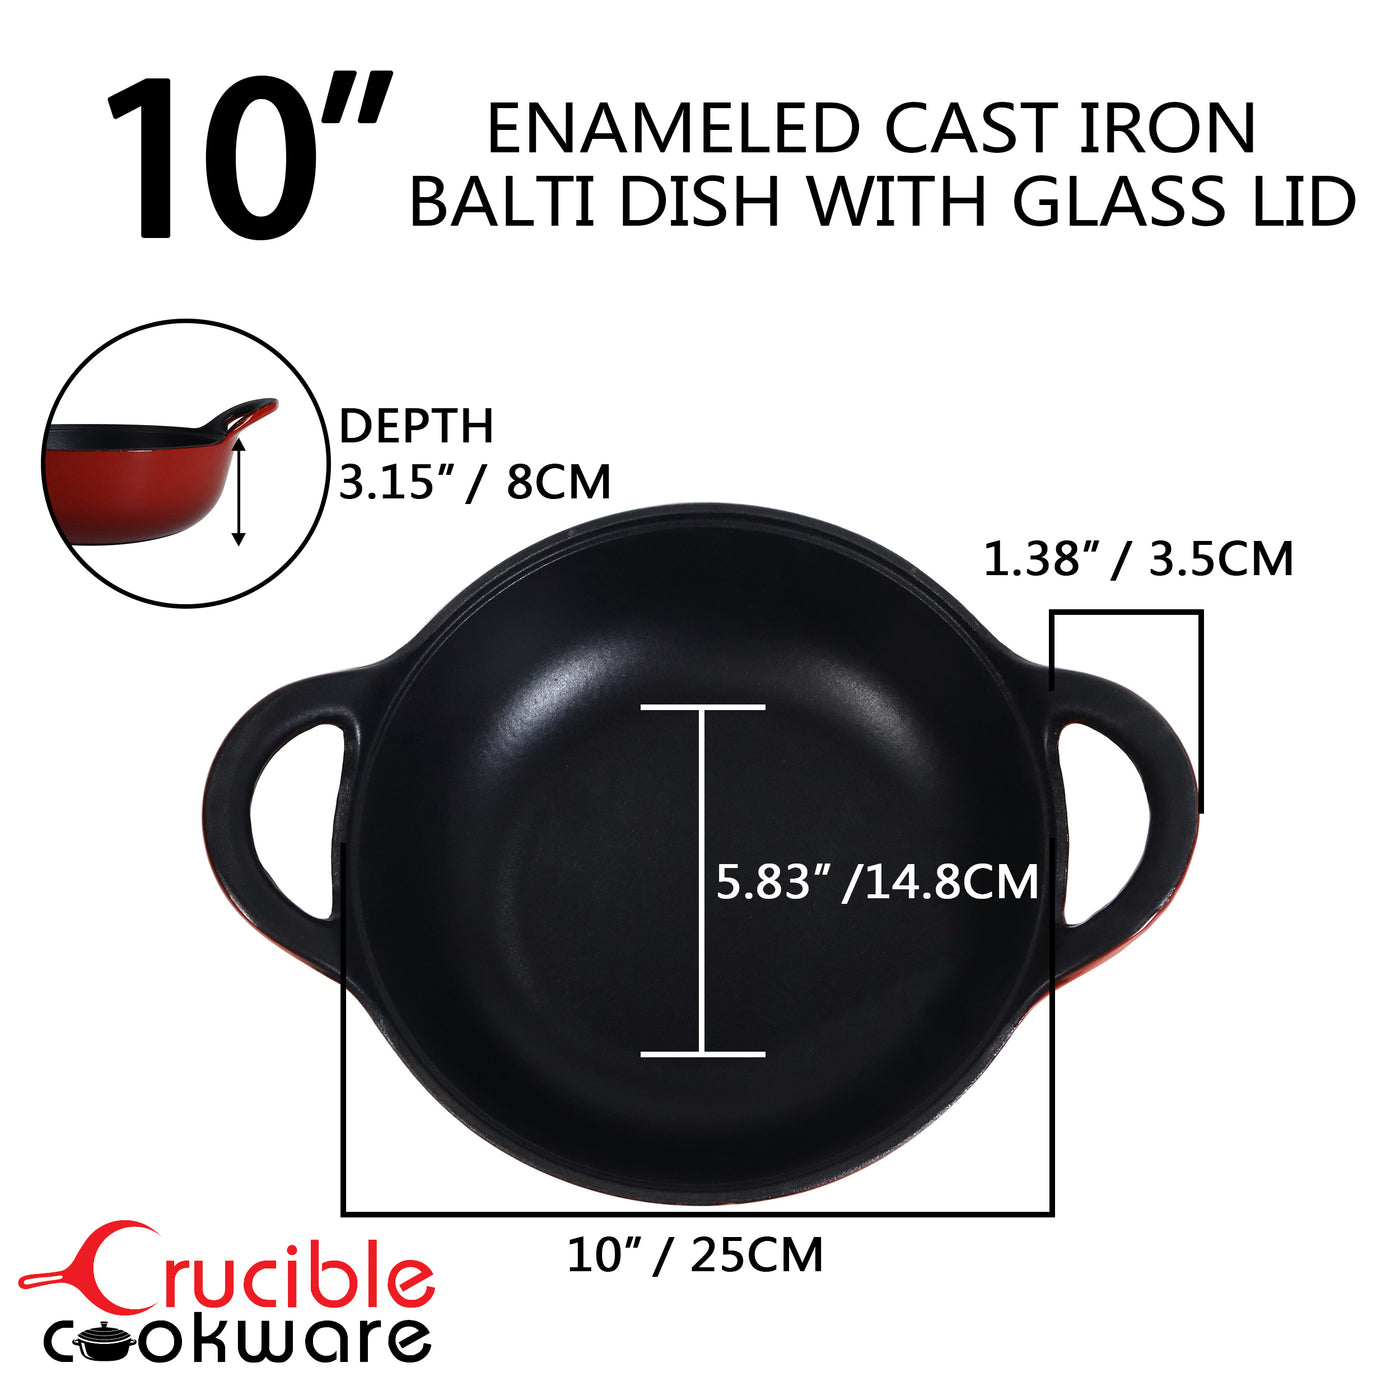 Enameled Cast Iron Balti Casserole with a Glass Lid, 3 Quart (2,83 litre) Cast Iron Casserole Dish